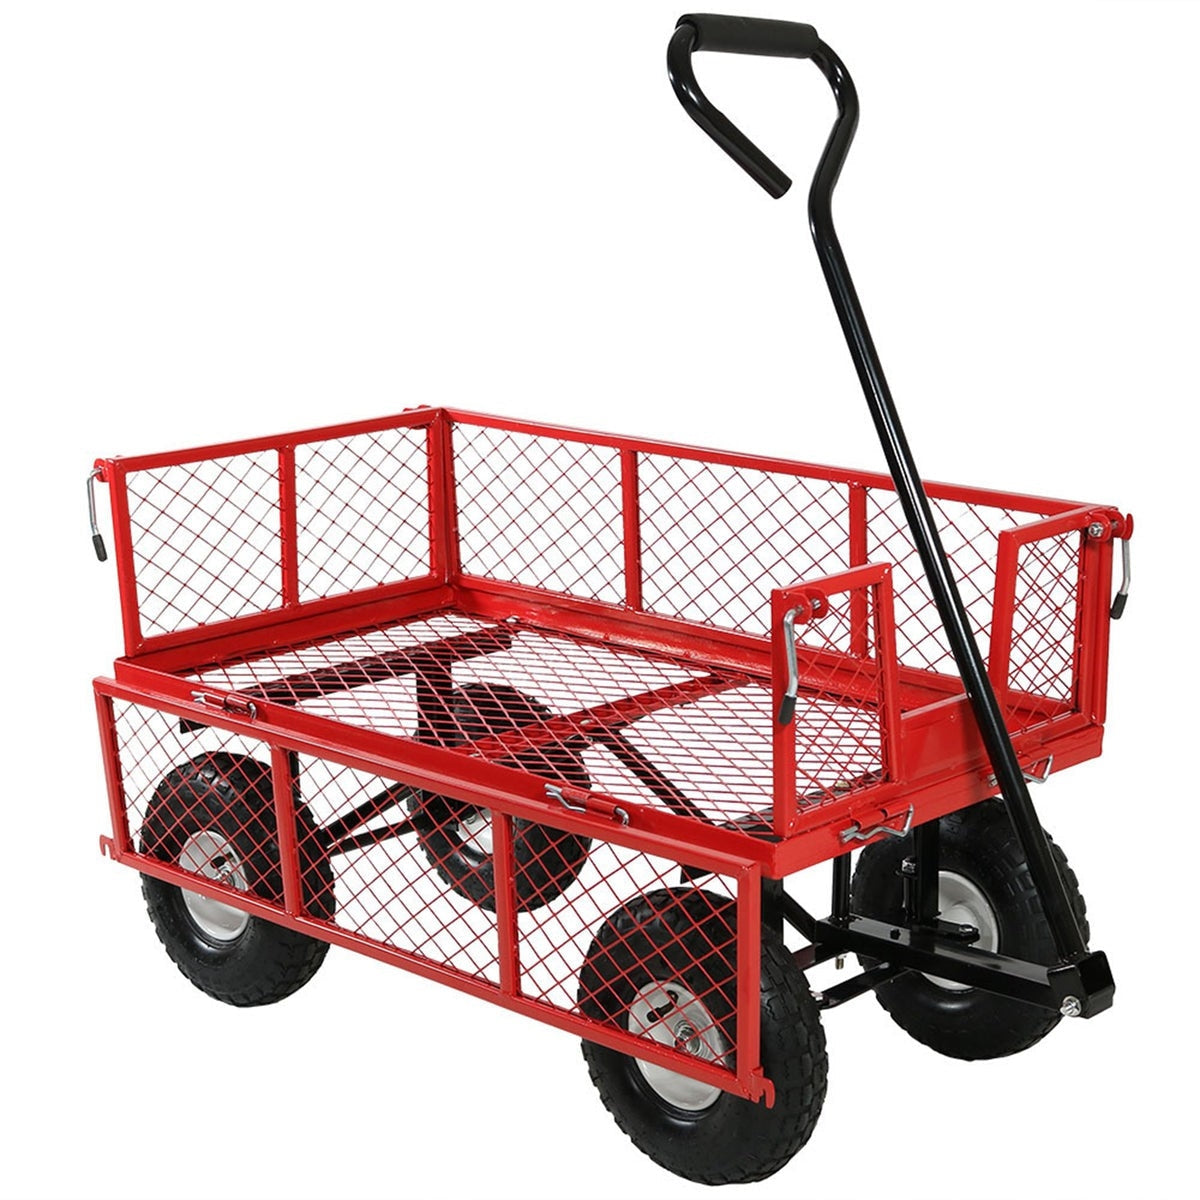 Outdoor > Gardening > Wheelbarrows Carts Wagons - Heavy Duty Red Wheelbarrow Steel Log Garden Cart